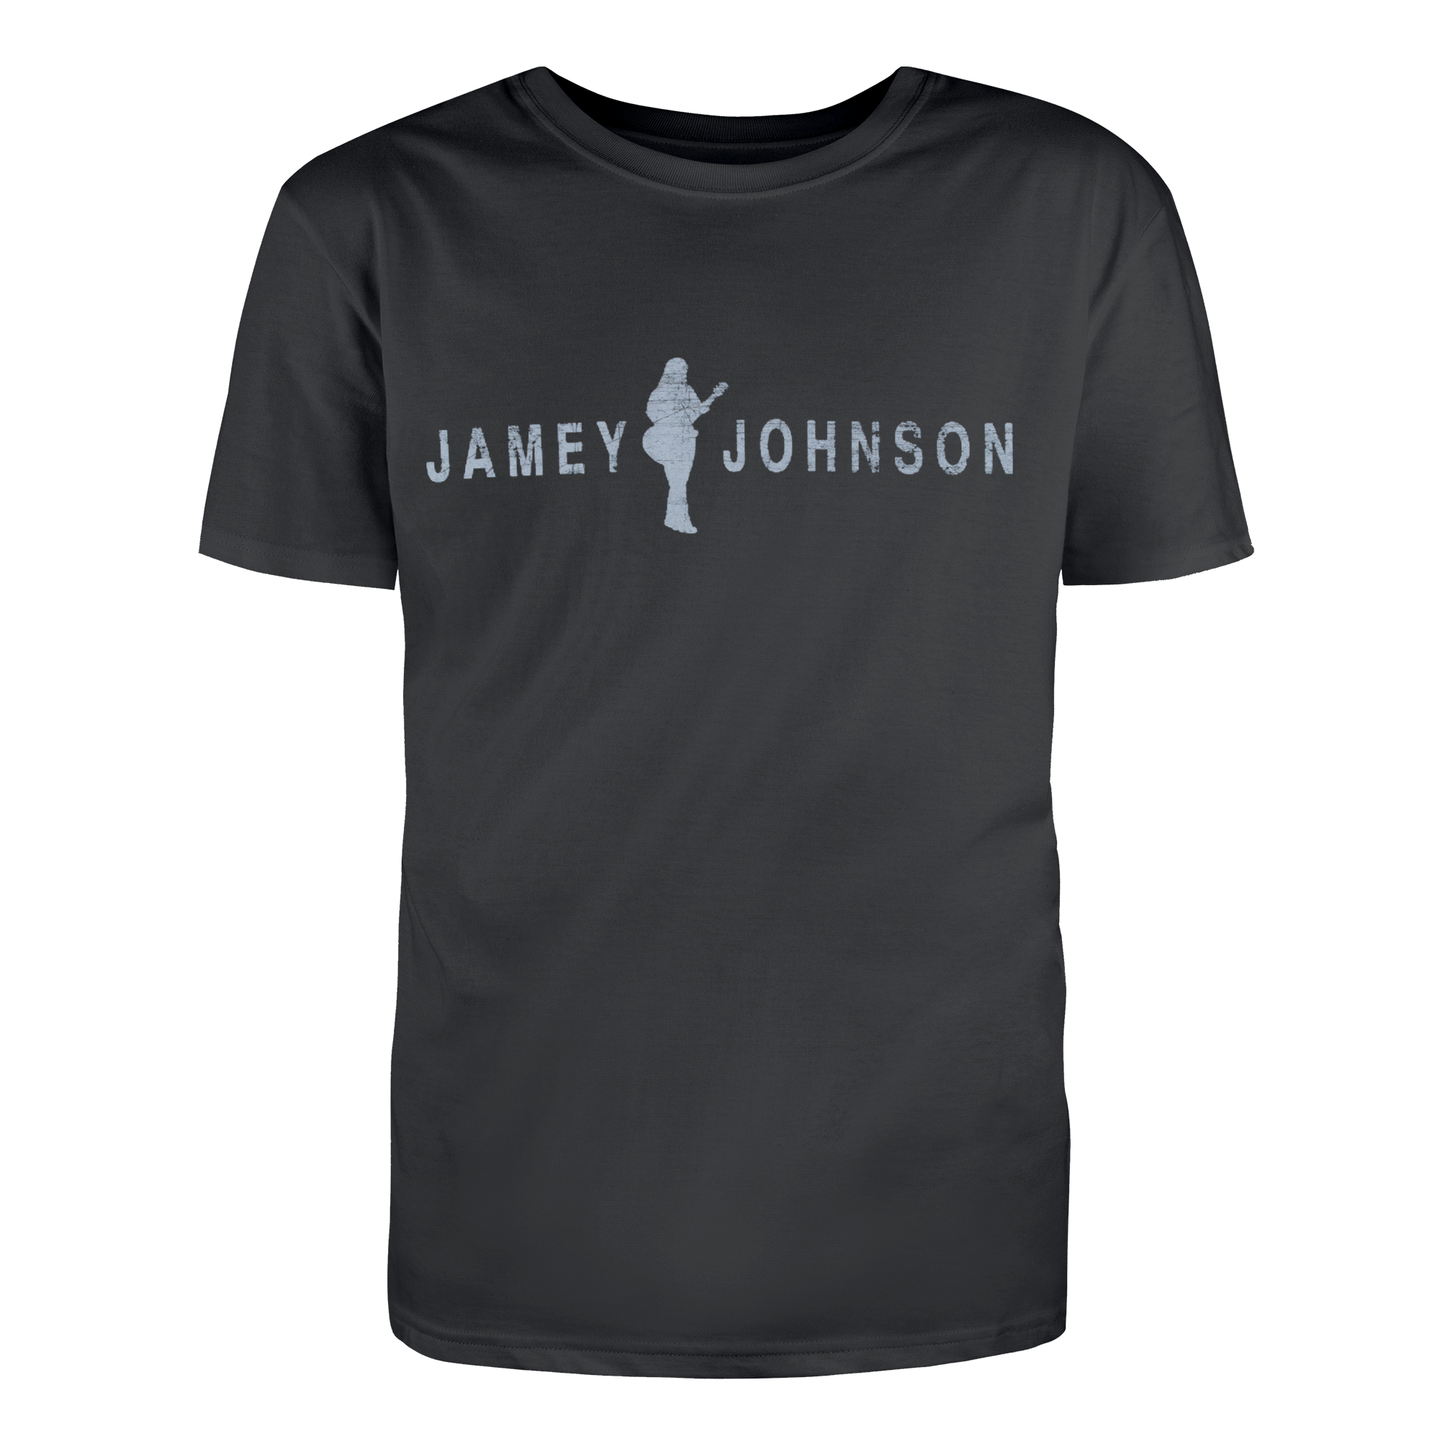 Jamey Johnson Logo Tee